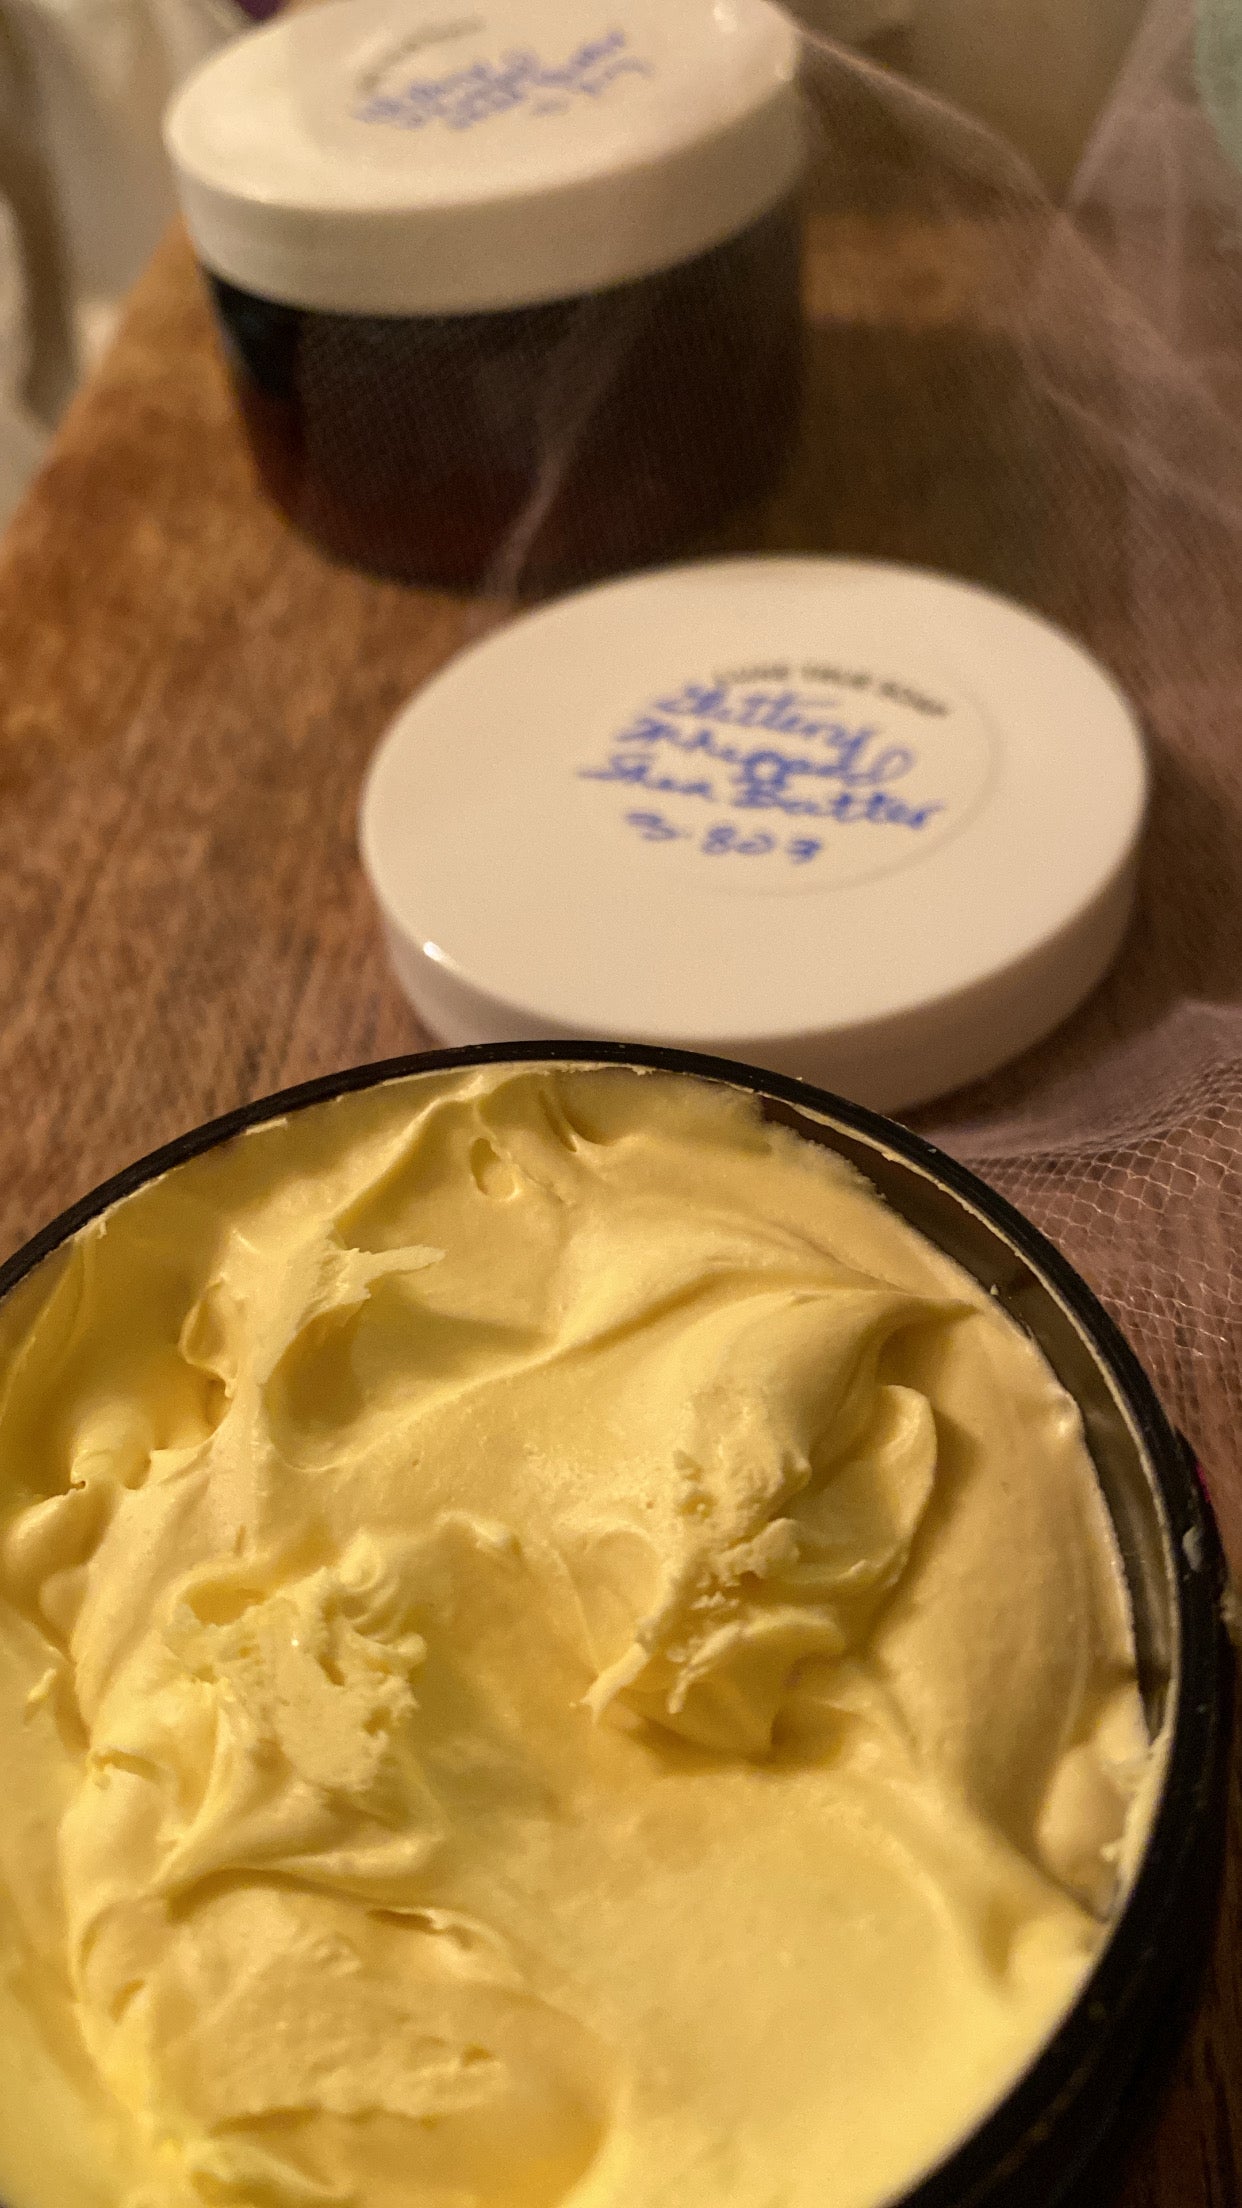 LTS Whipped Shea Butter hand cream